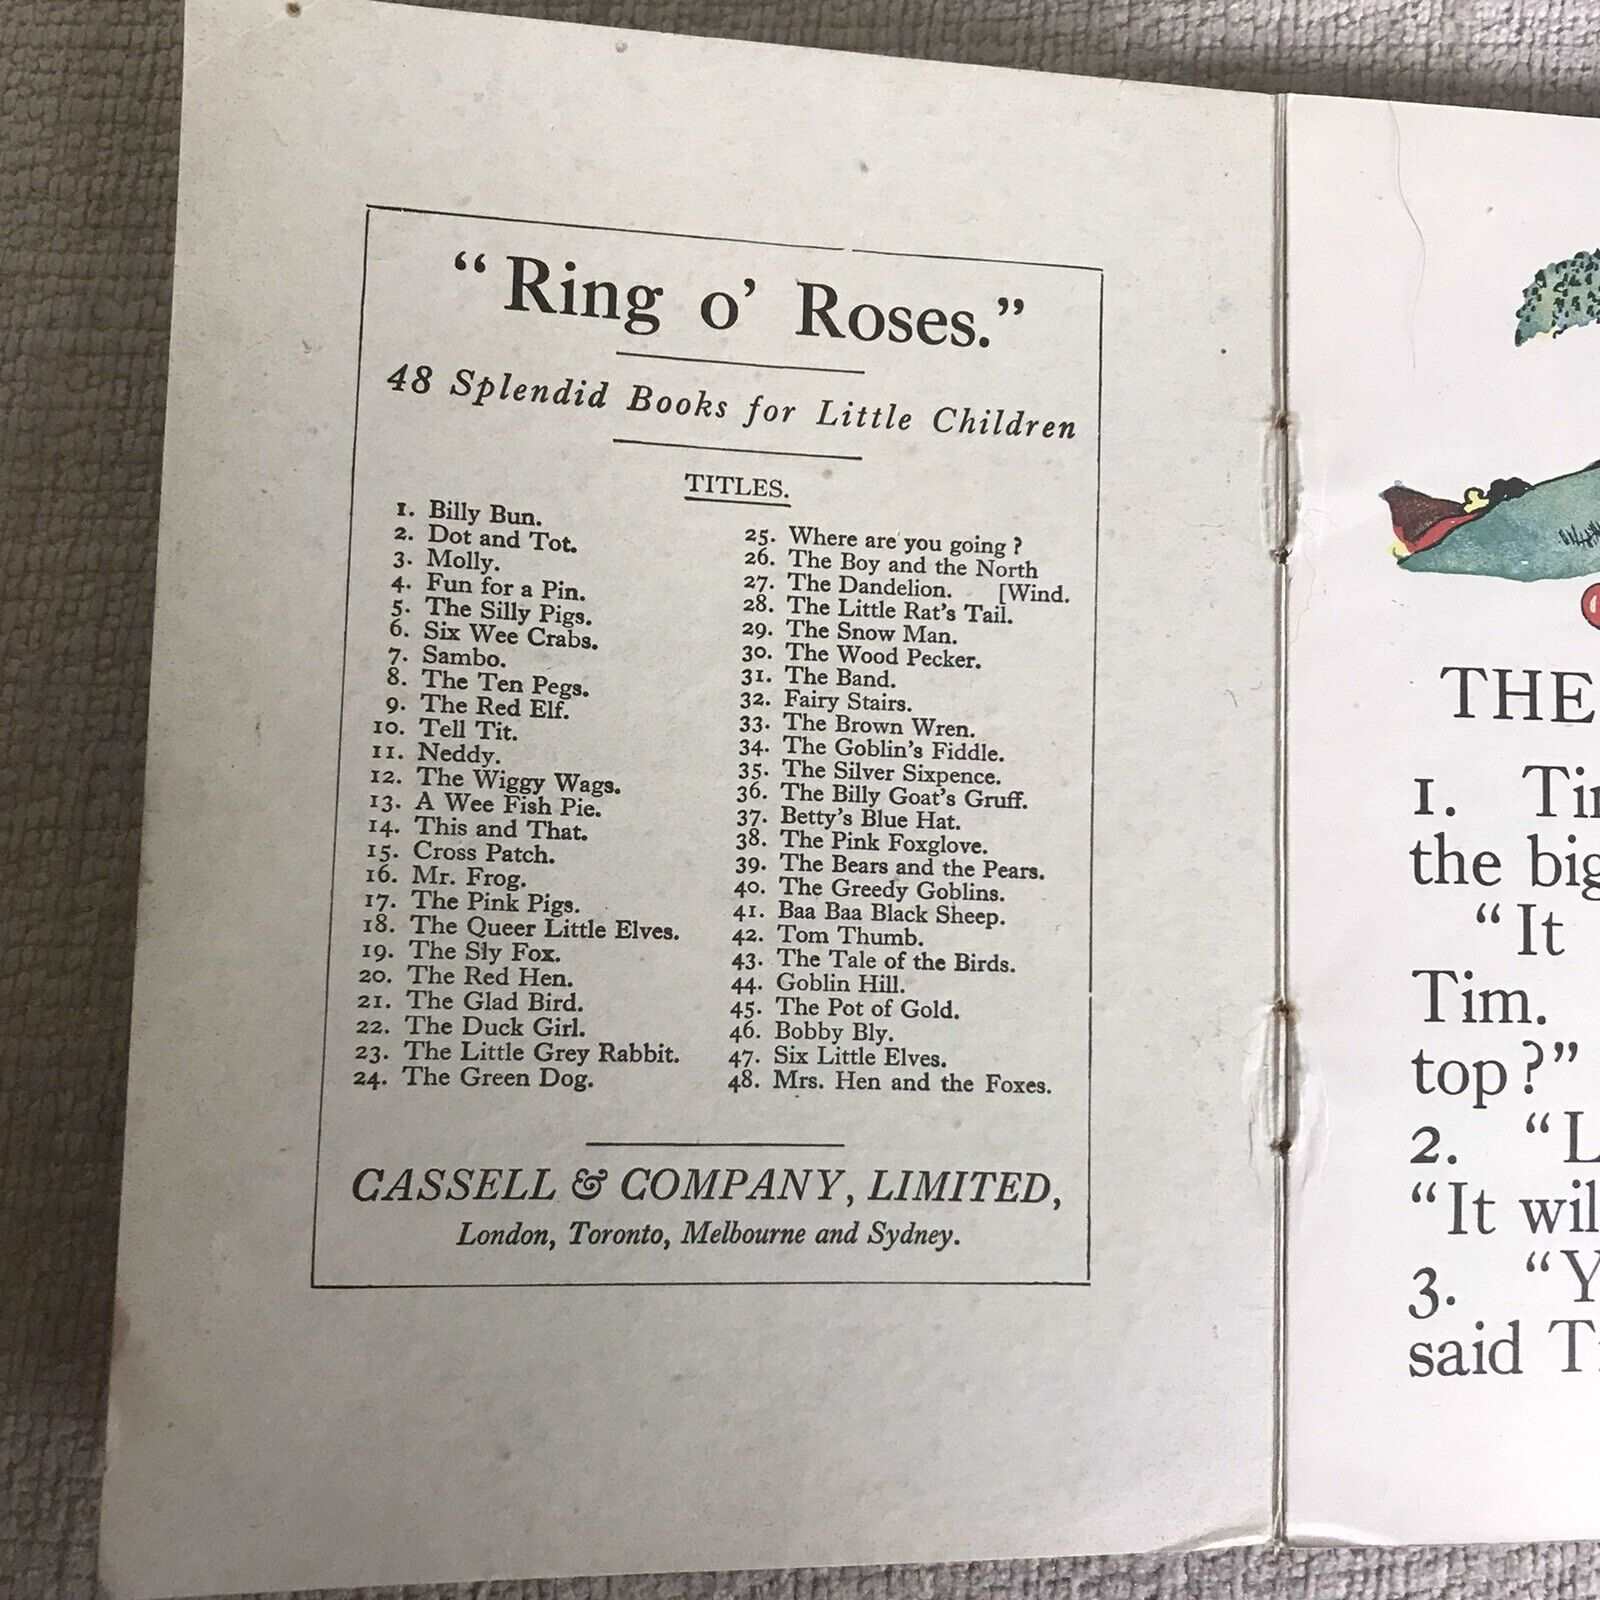 1927 Ring-O-Roses No12 The Wiggy Wags (Hilda Cowham Illust) Cassell Honeyburn Books (UK)